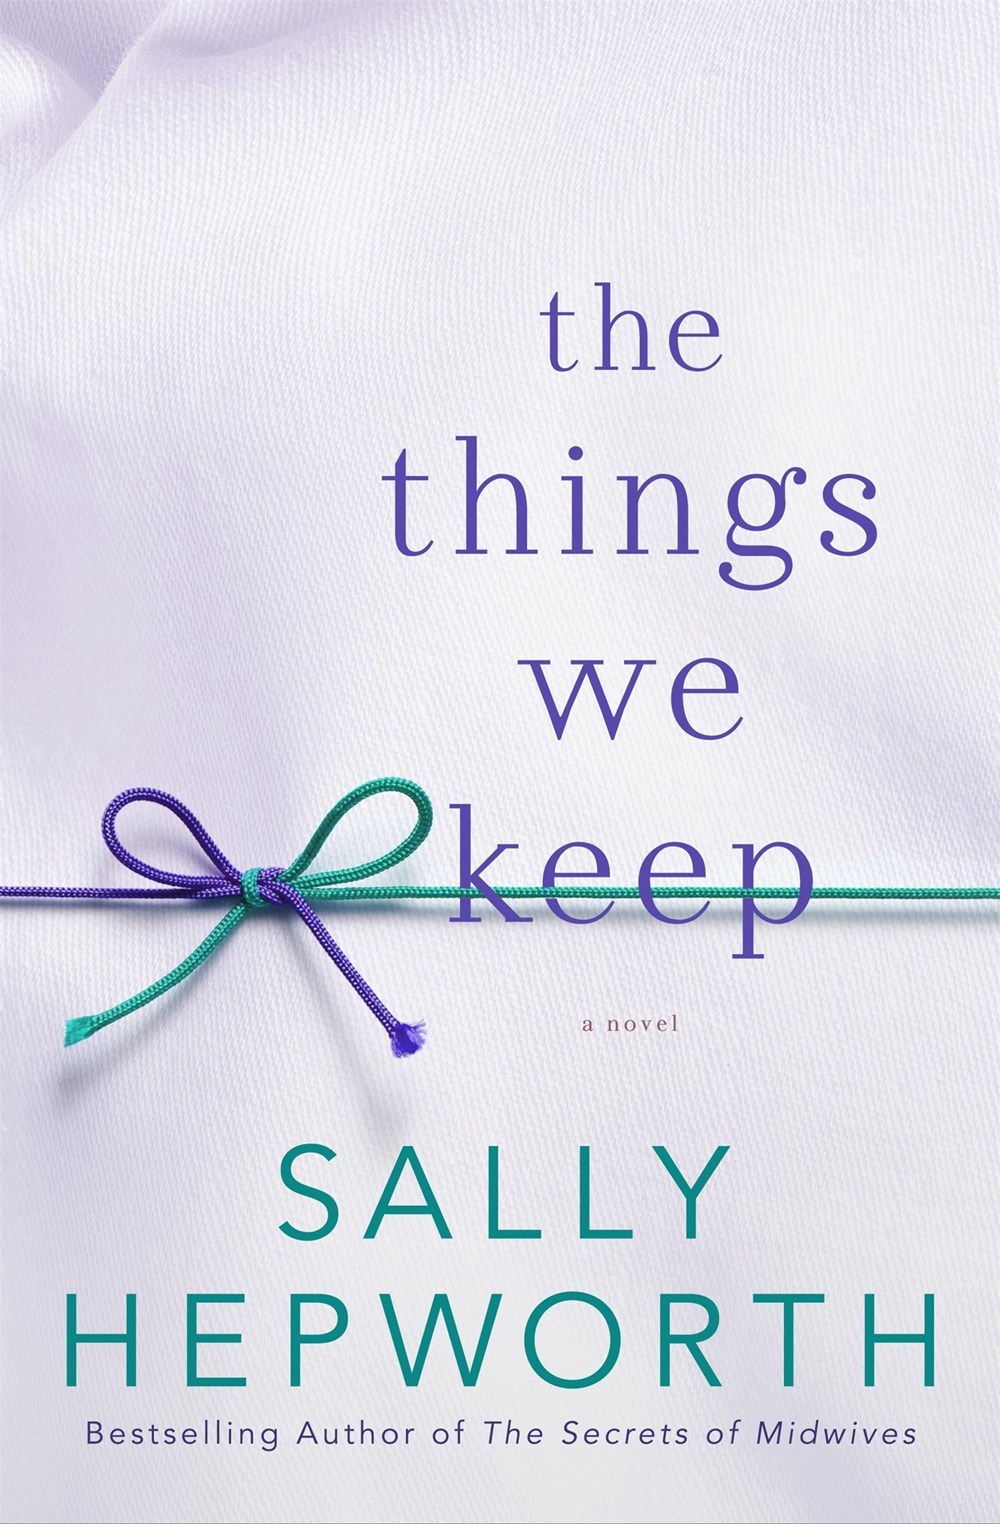 The Things We Keep by Sally Hepworth PDF Download